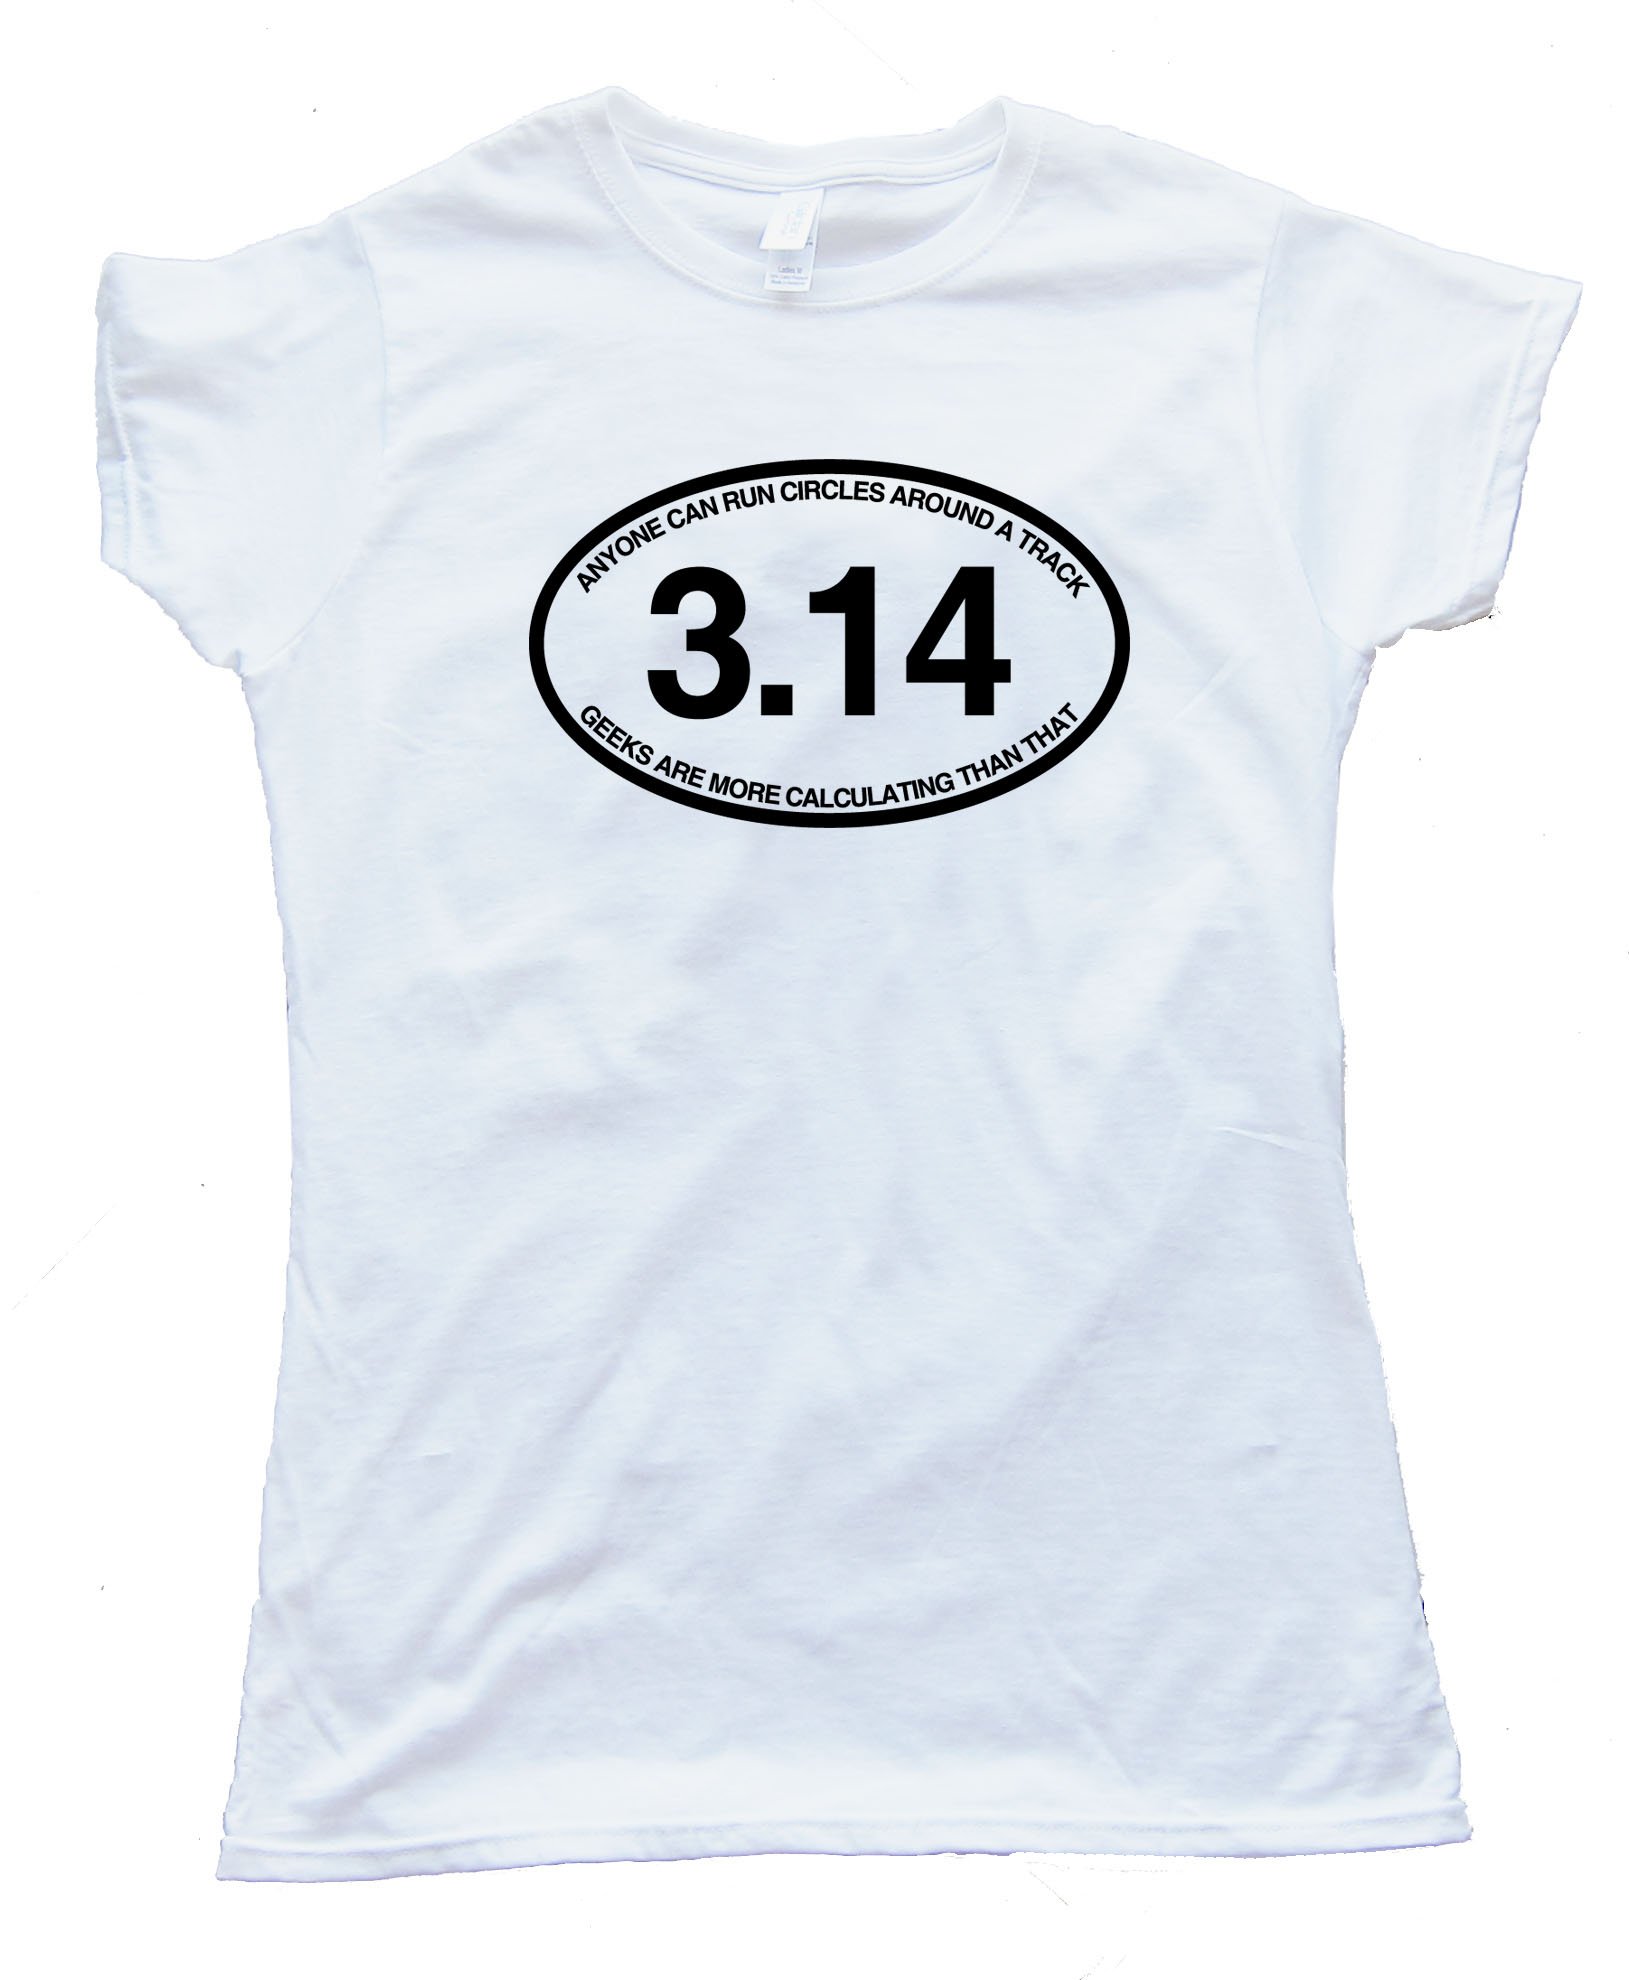 Womens 3.14 Anyone Can Run Circles Around A Track - Tee Shirt